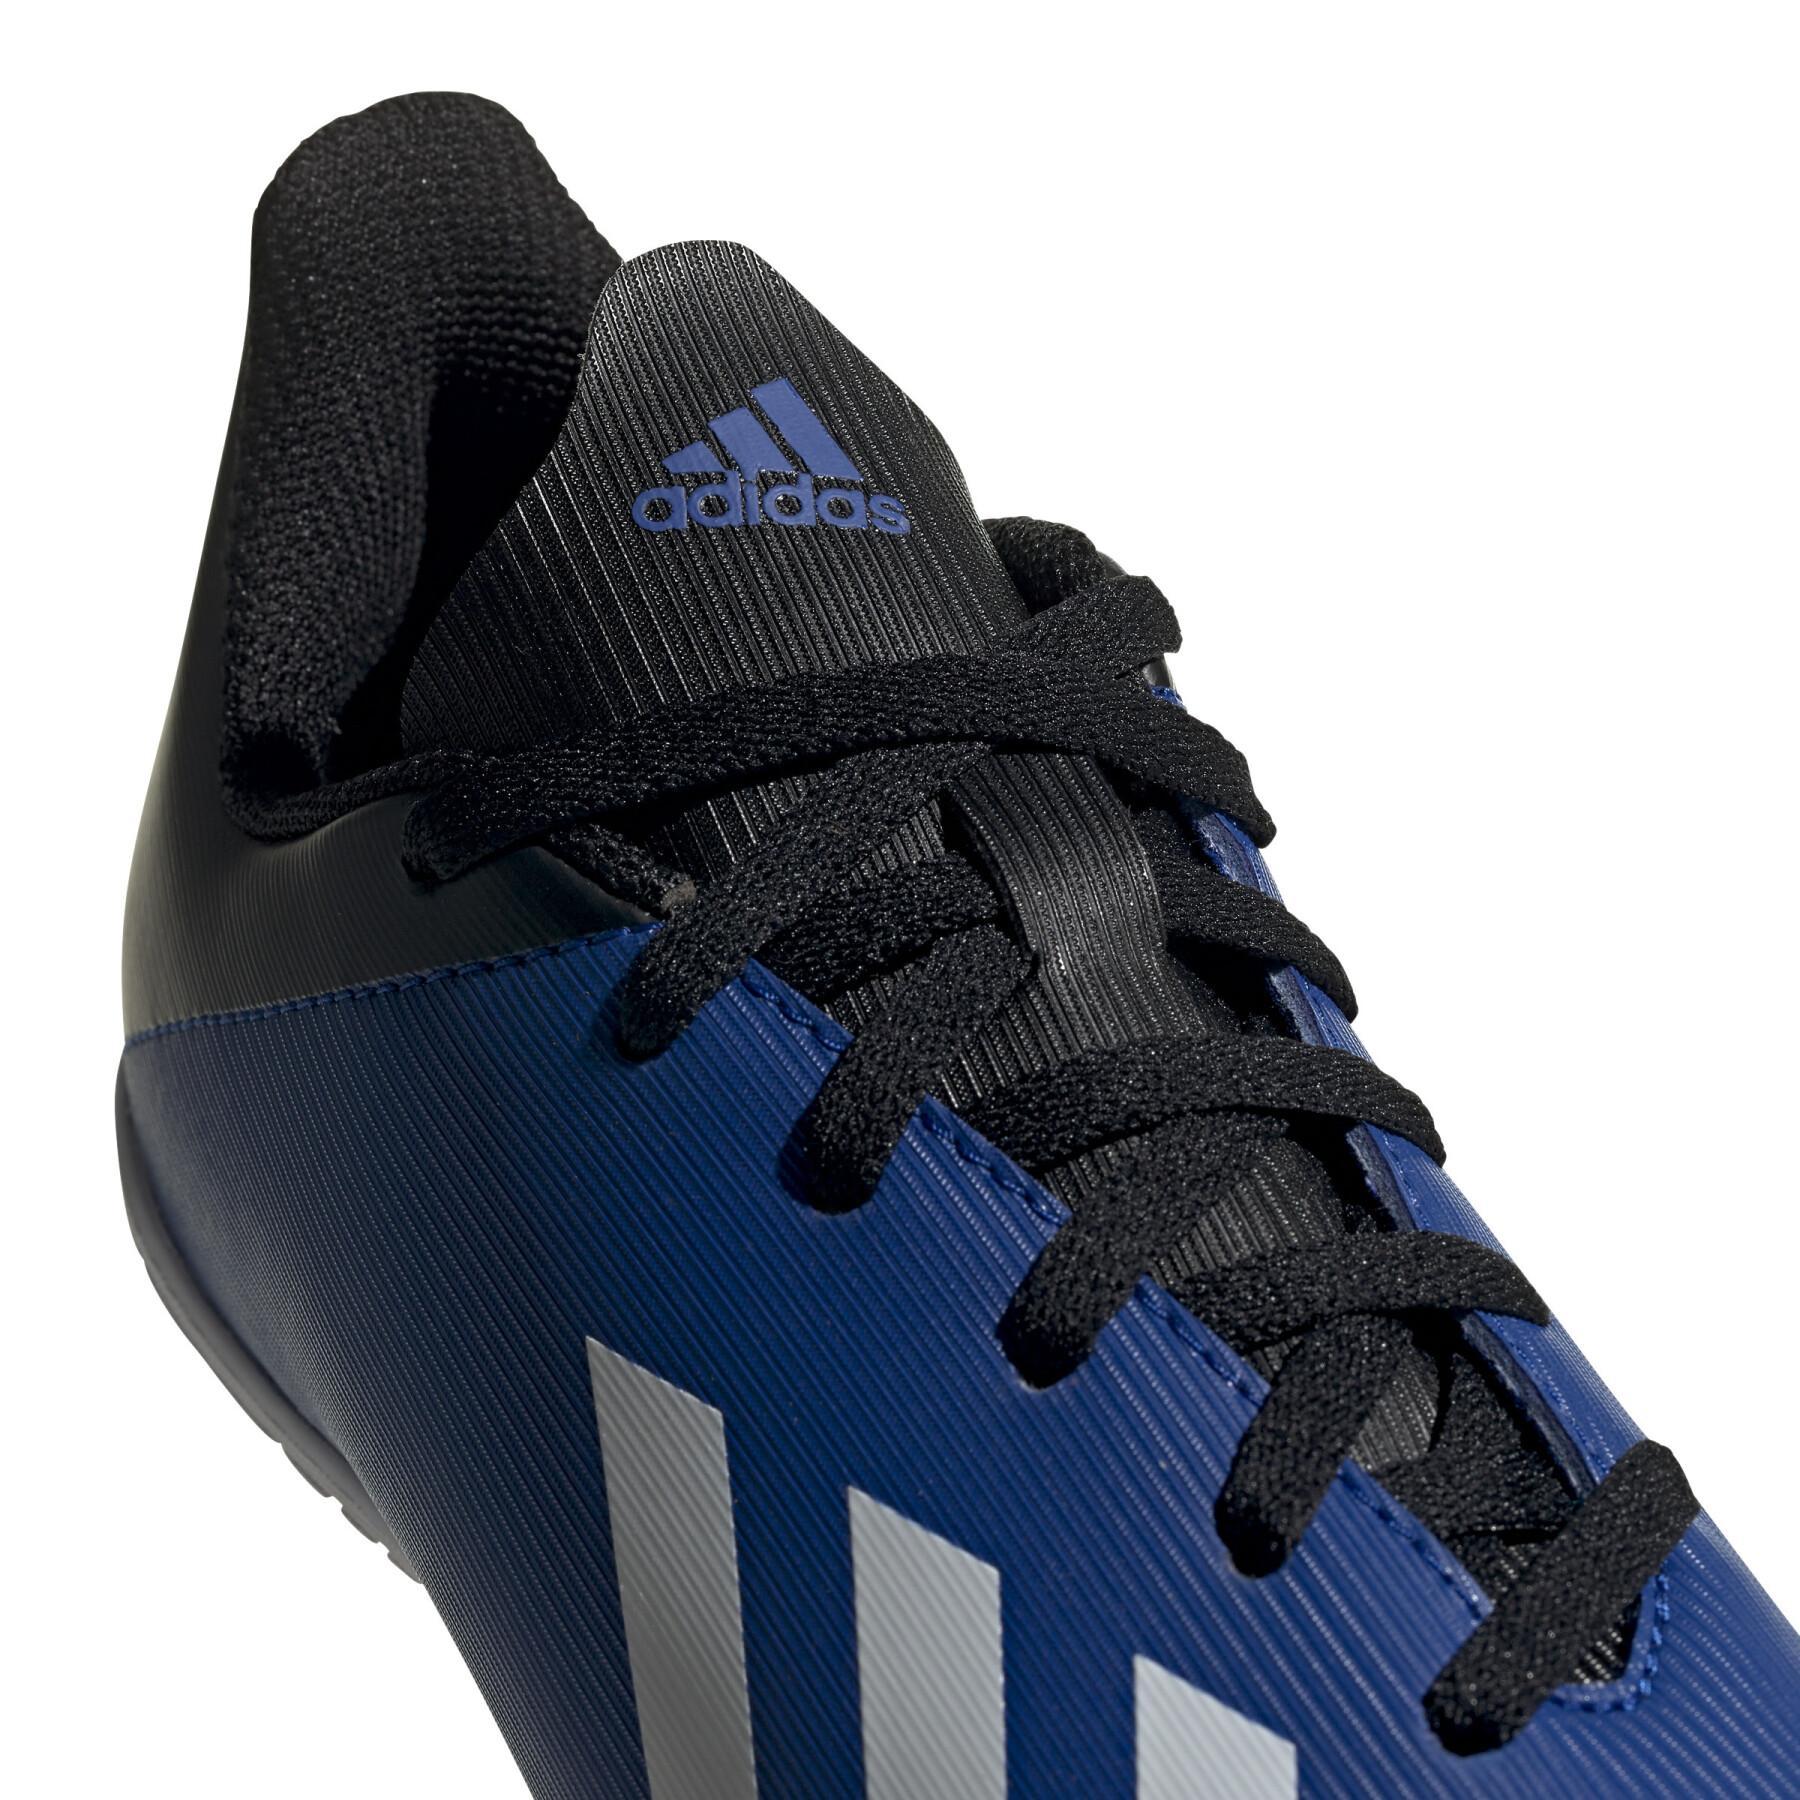 Chaussures de football enfant adidas X 19.4 IN